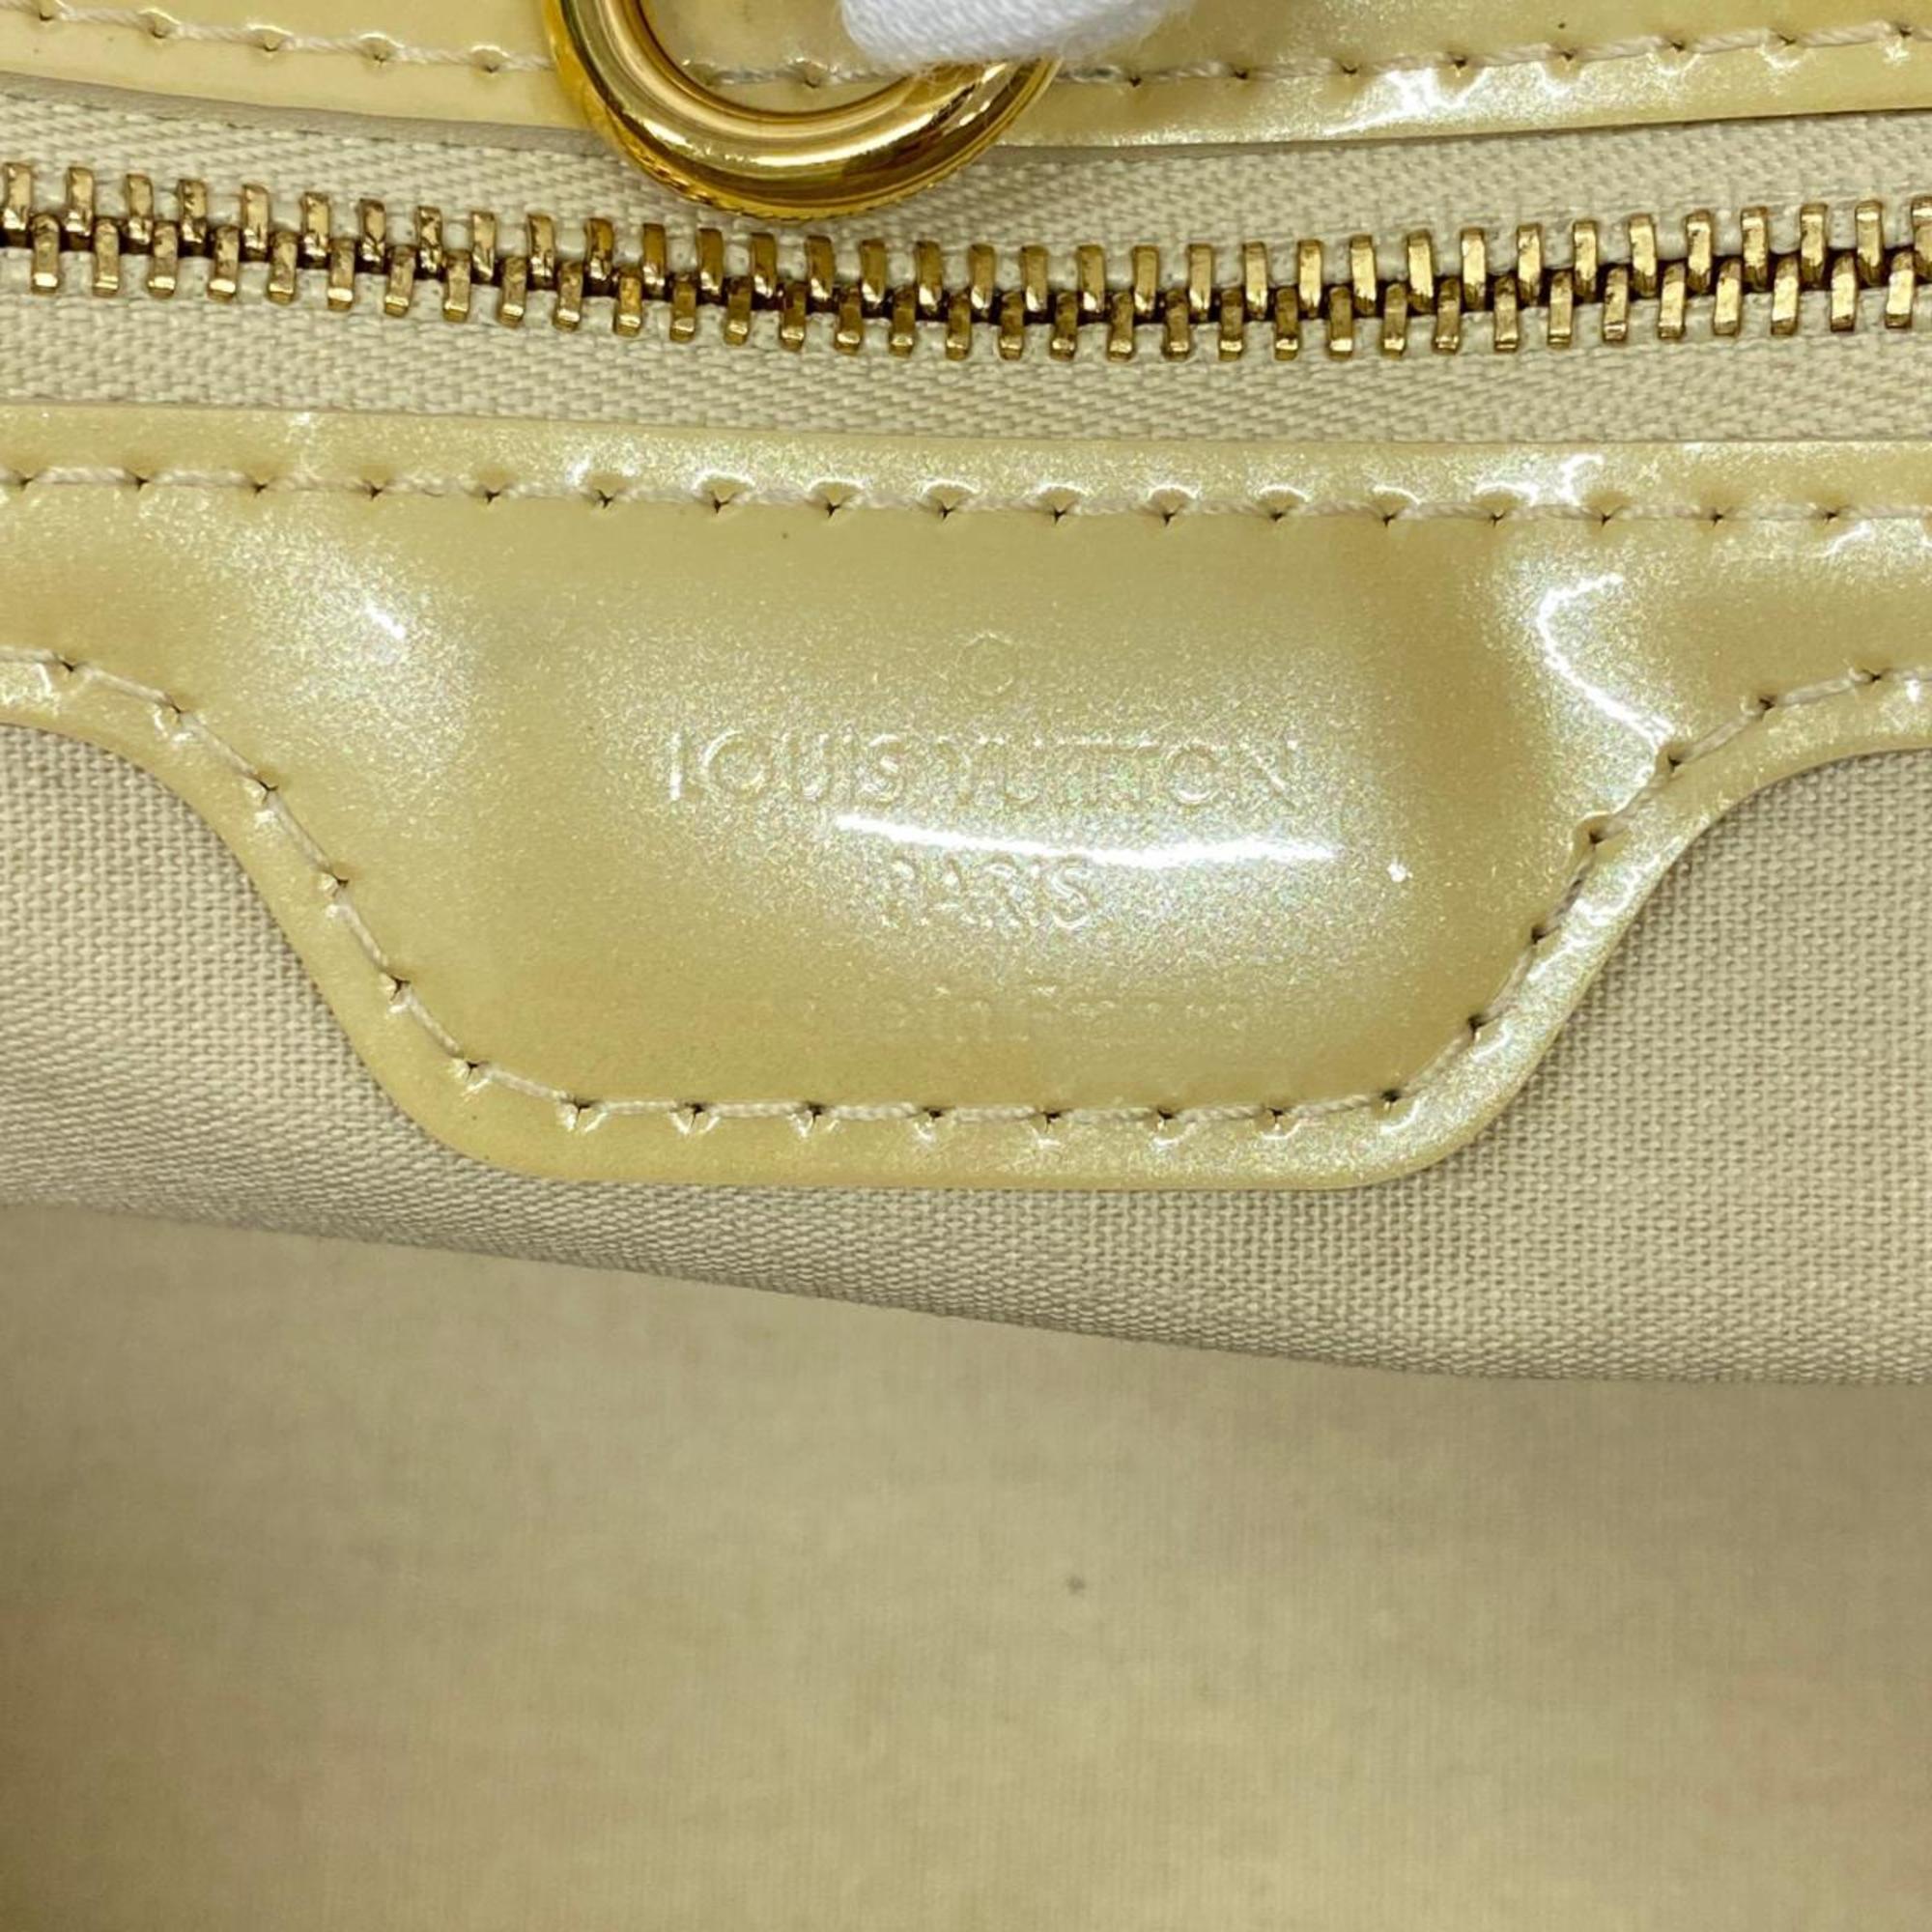 Louis Vuitton Handbag Vernis Wilshire PM M91452 Broncorail Ladies